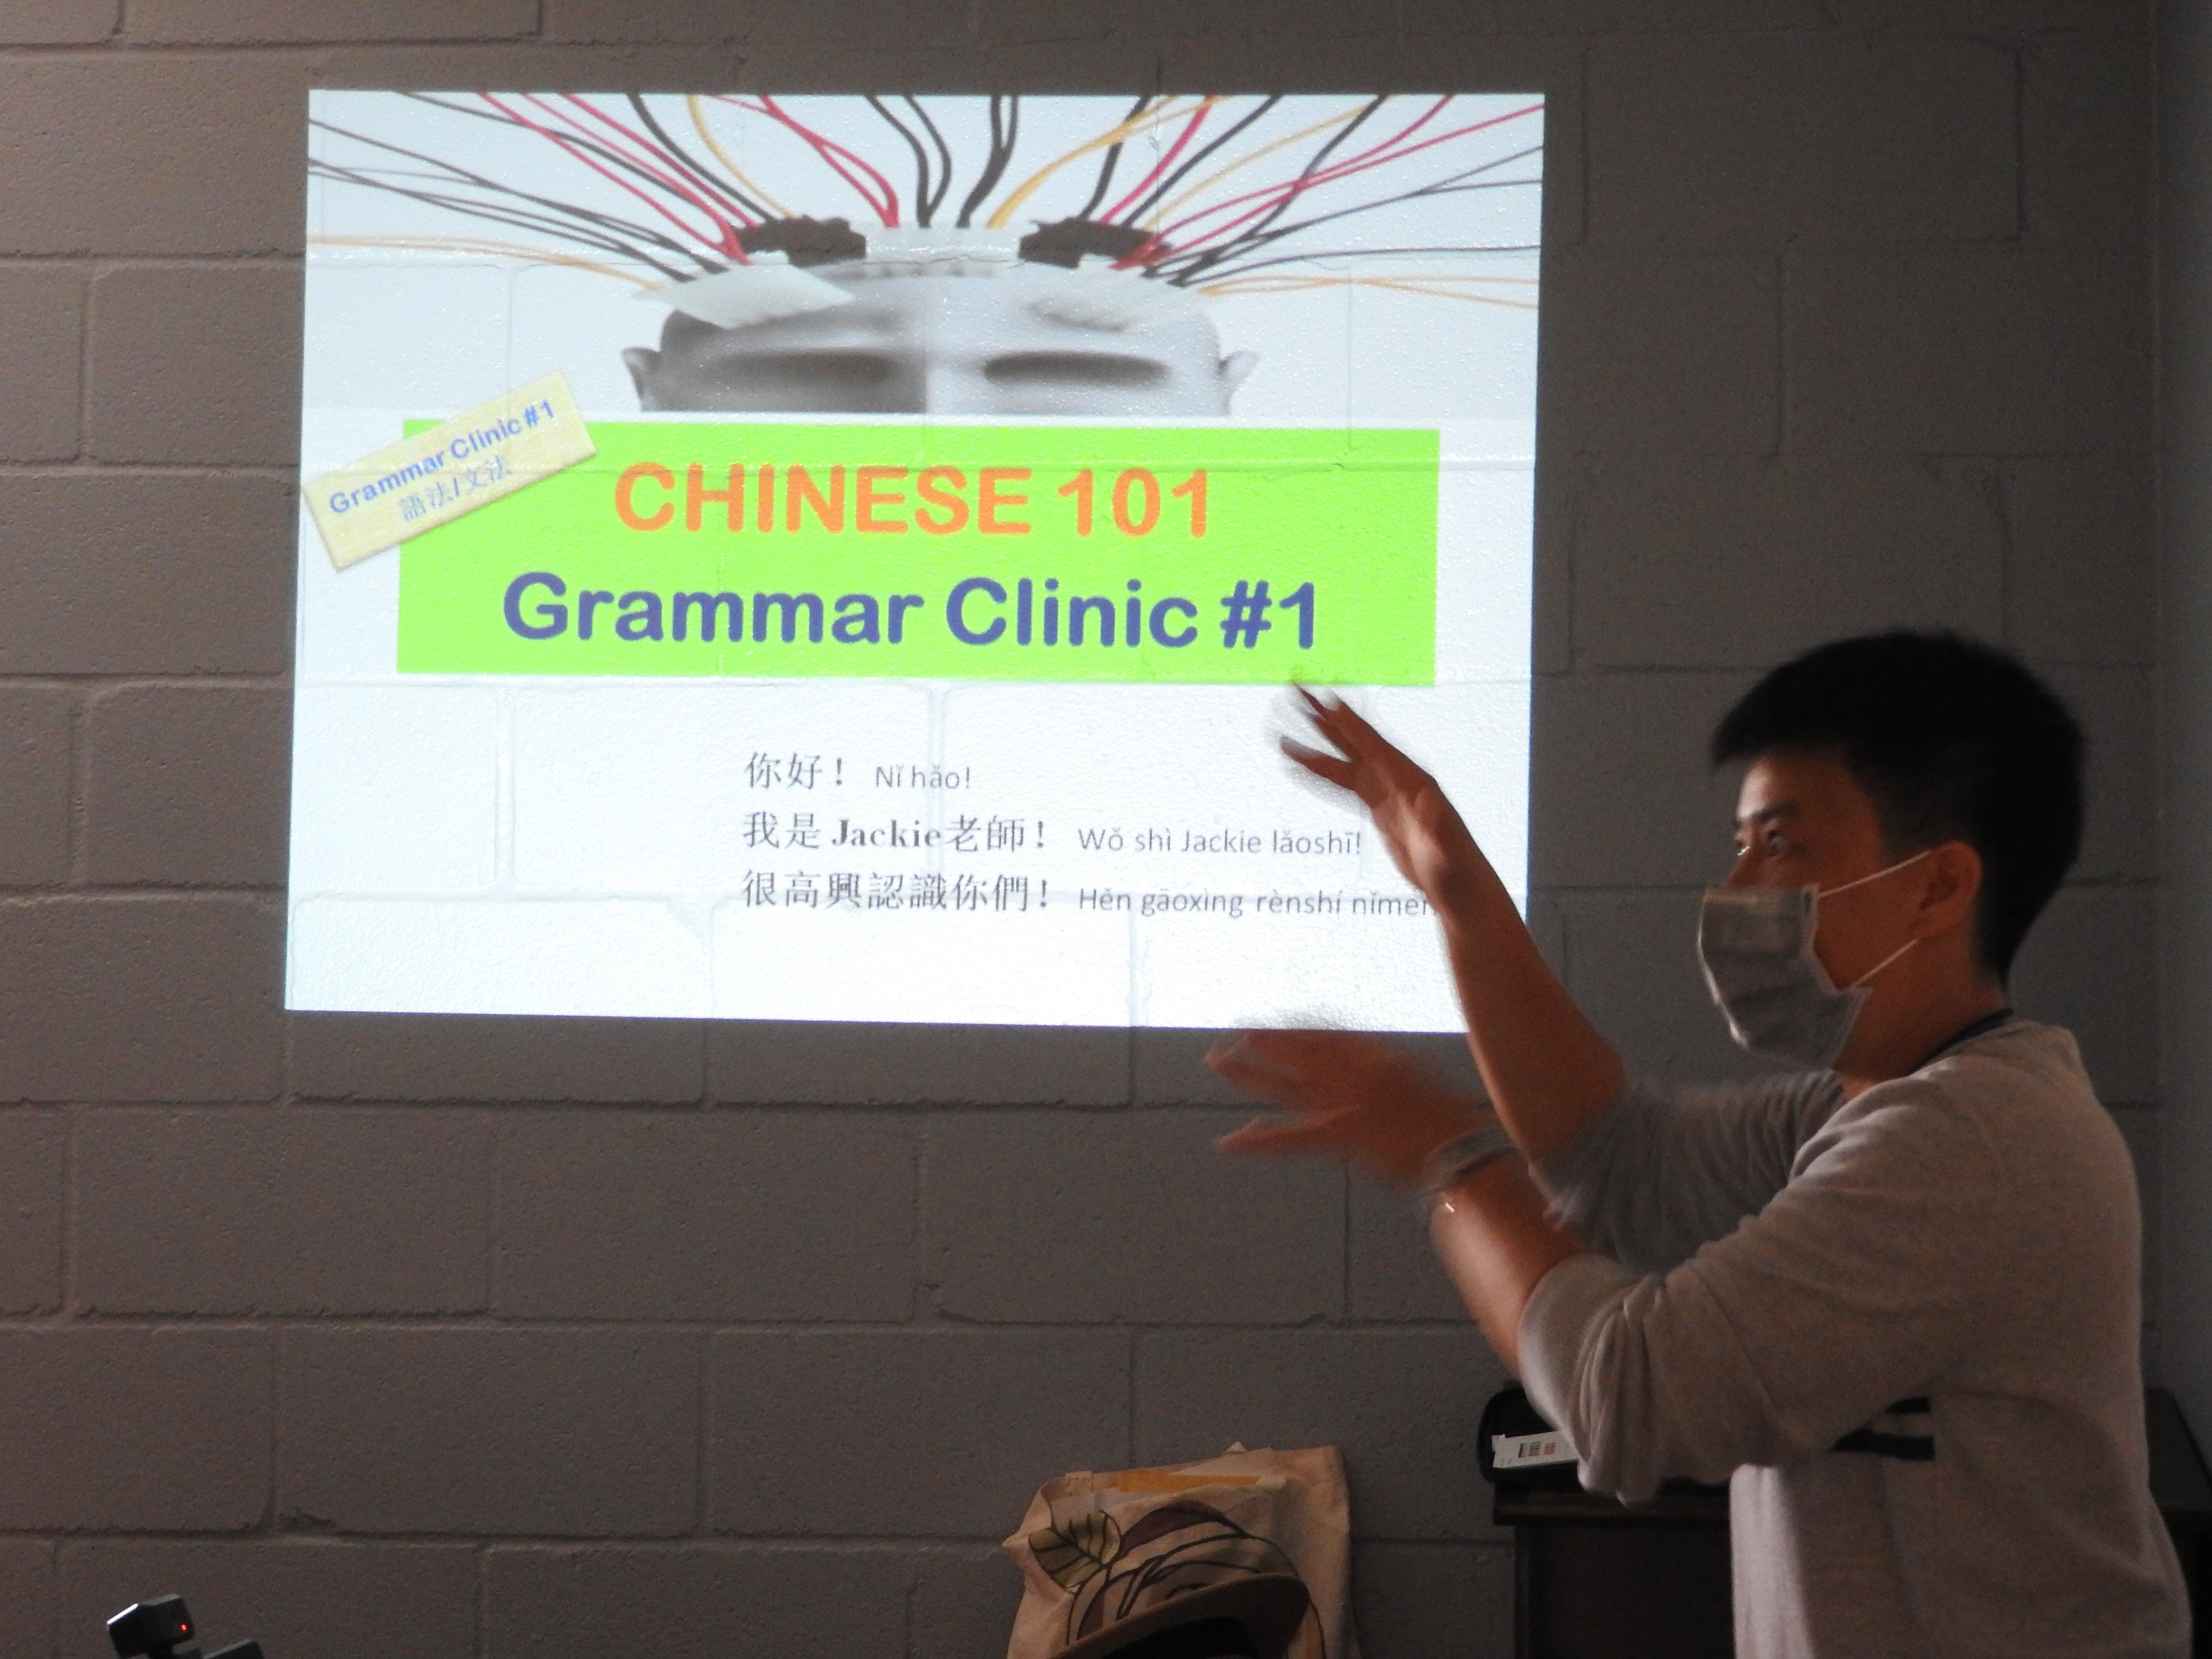 Class at Taiwan Center for Mandarin Learning in Atlanta class situation. 華語文學習中心上課情況